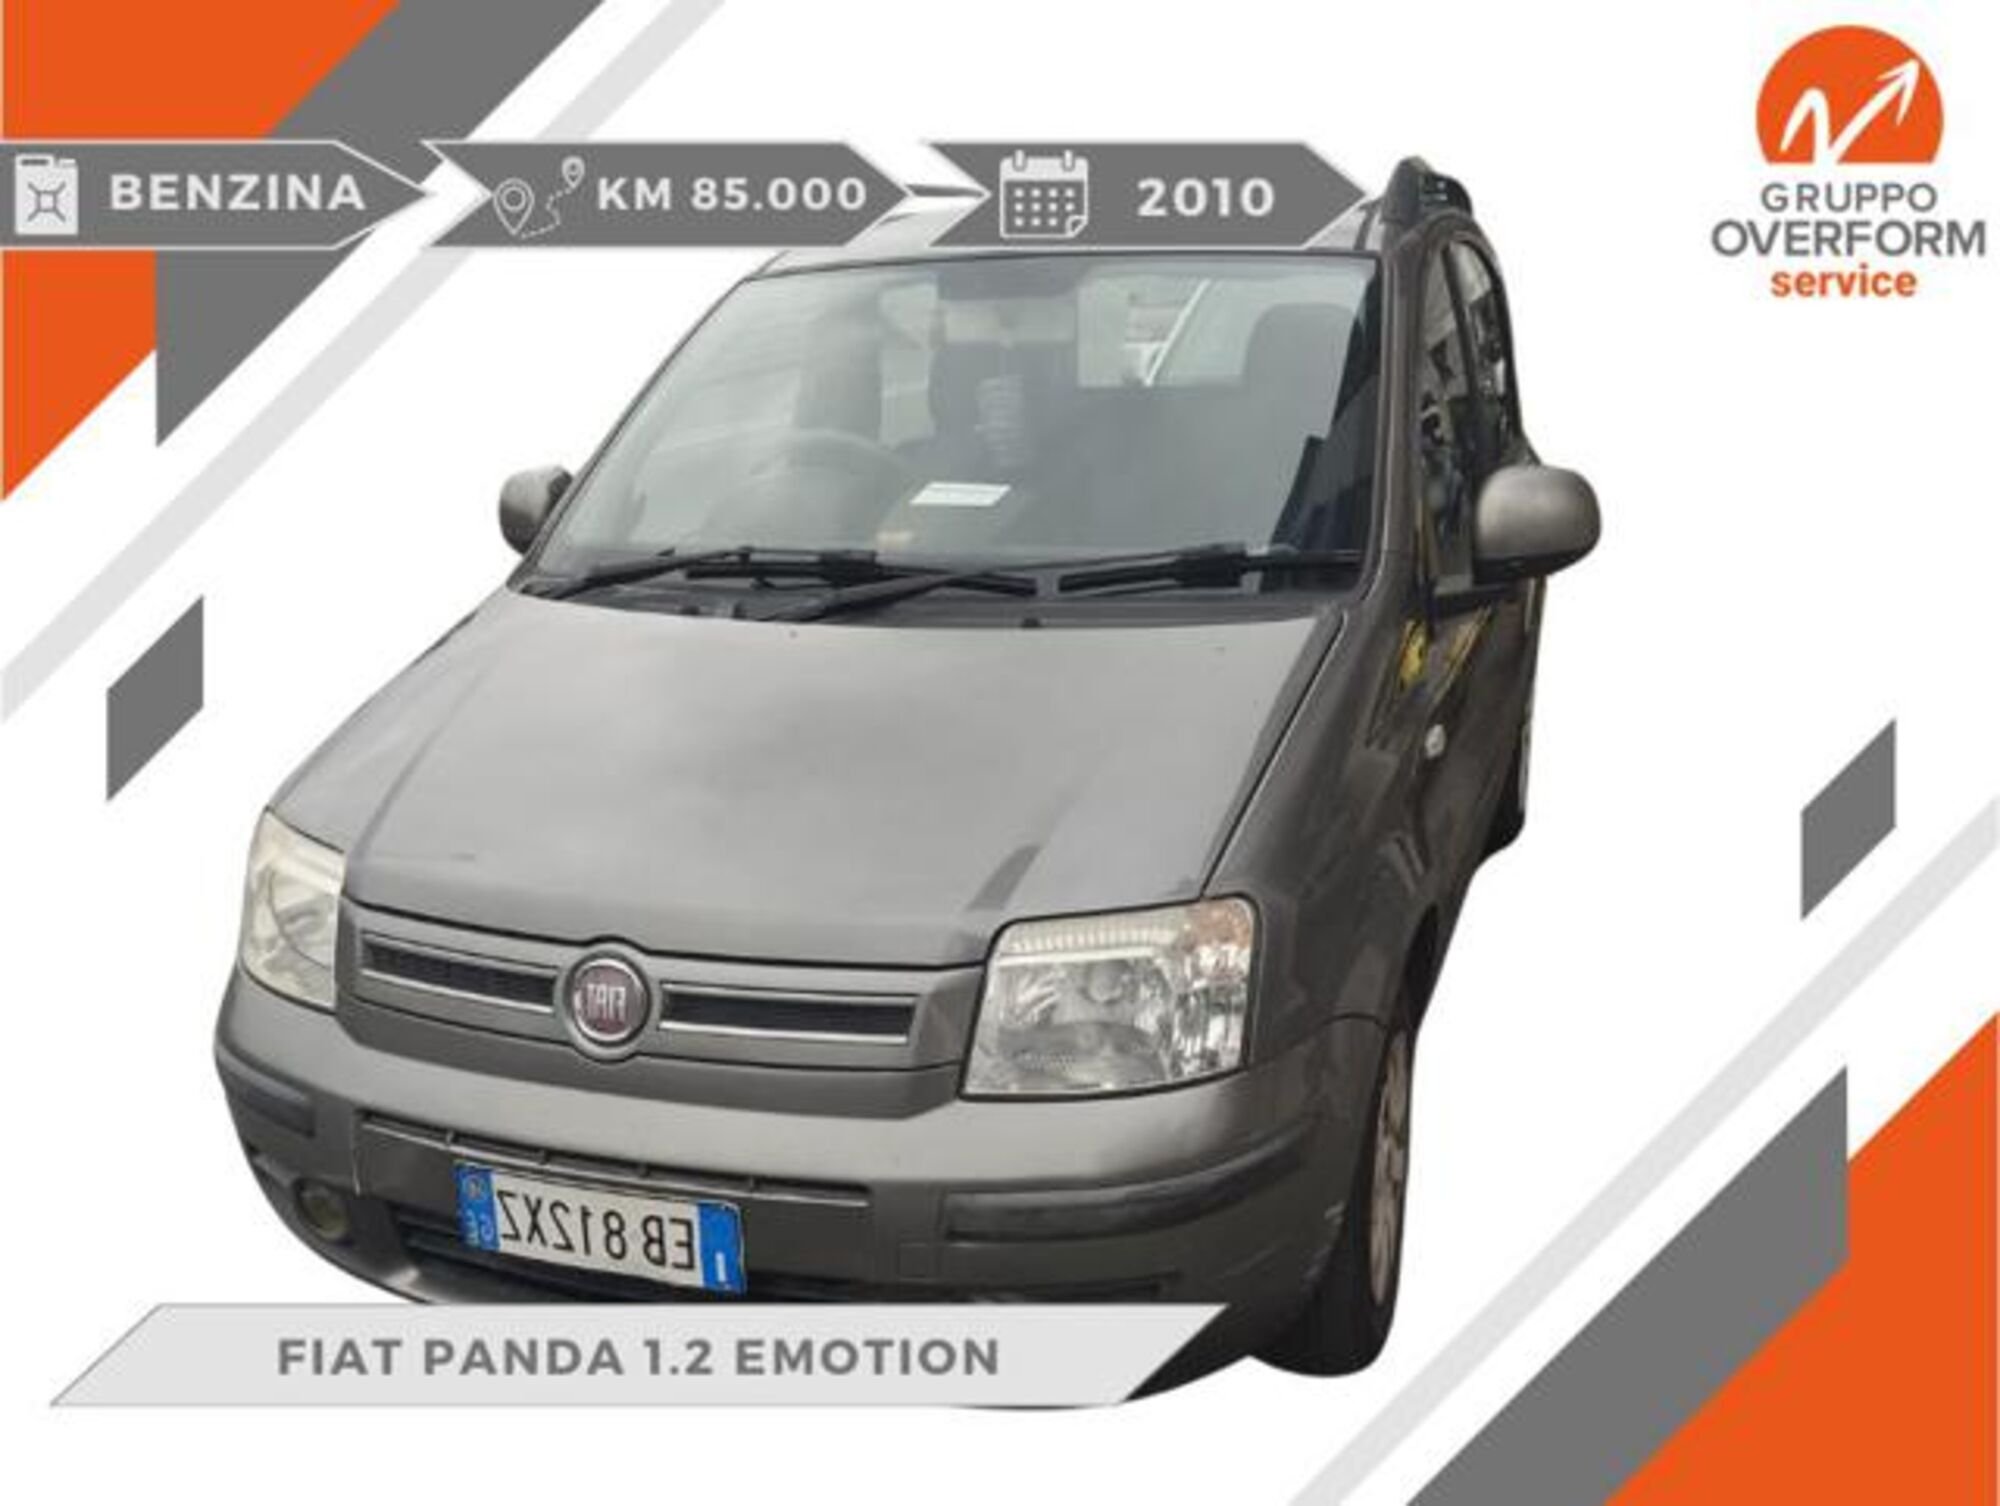 Fiat Panda 1.2 Emotion my 05